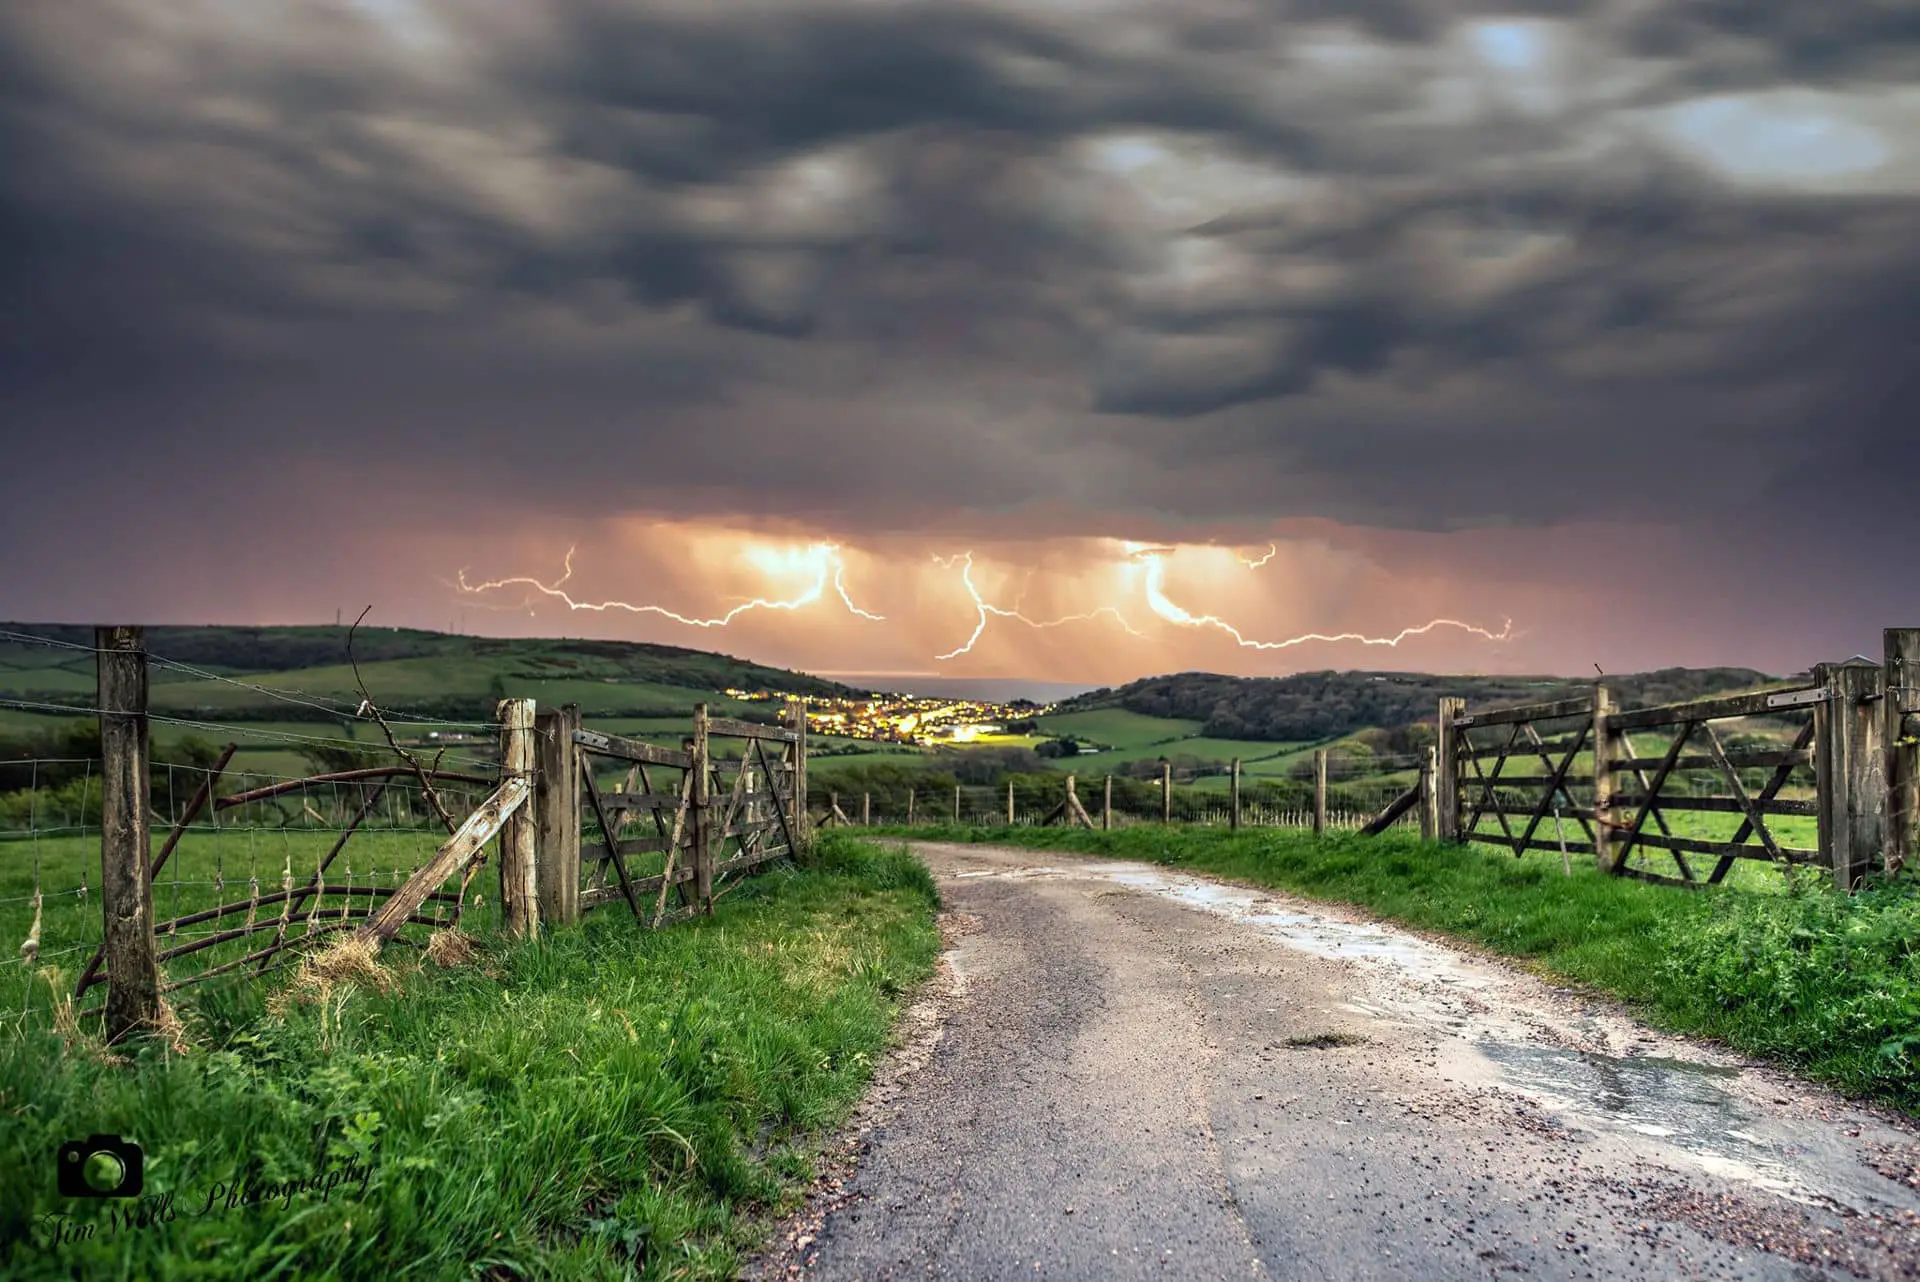 Lightning over Ventnor by Tim Wells